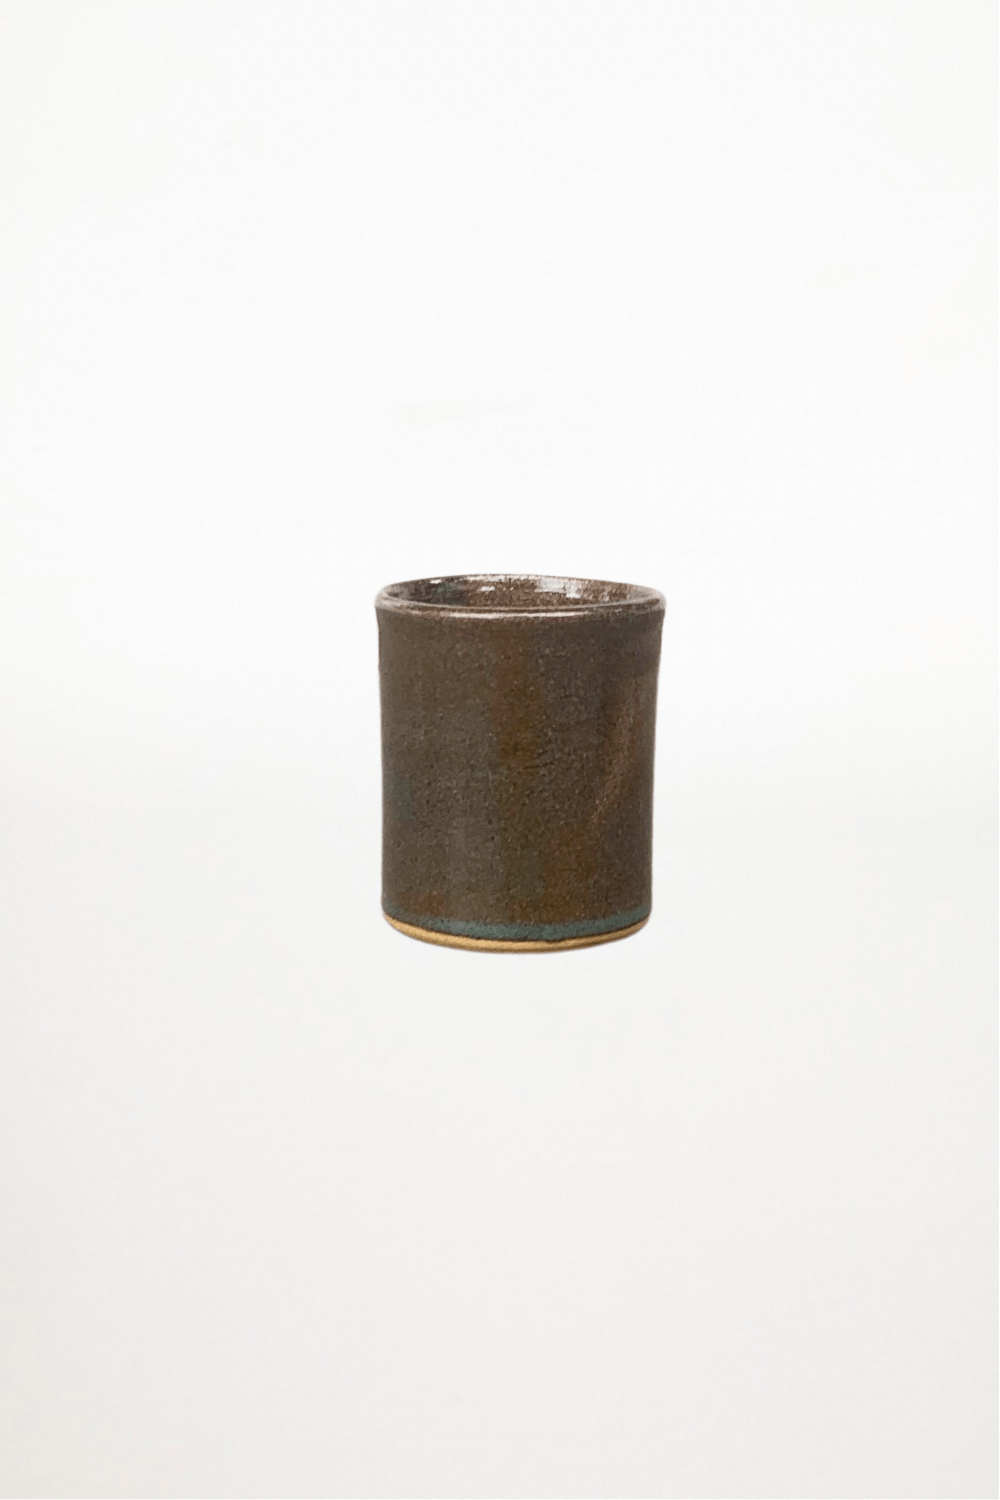 Bennetts Pottery - Cup - Brown - Ensemble Studios